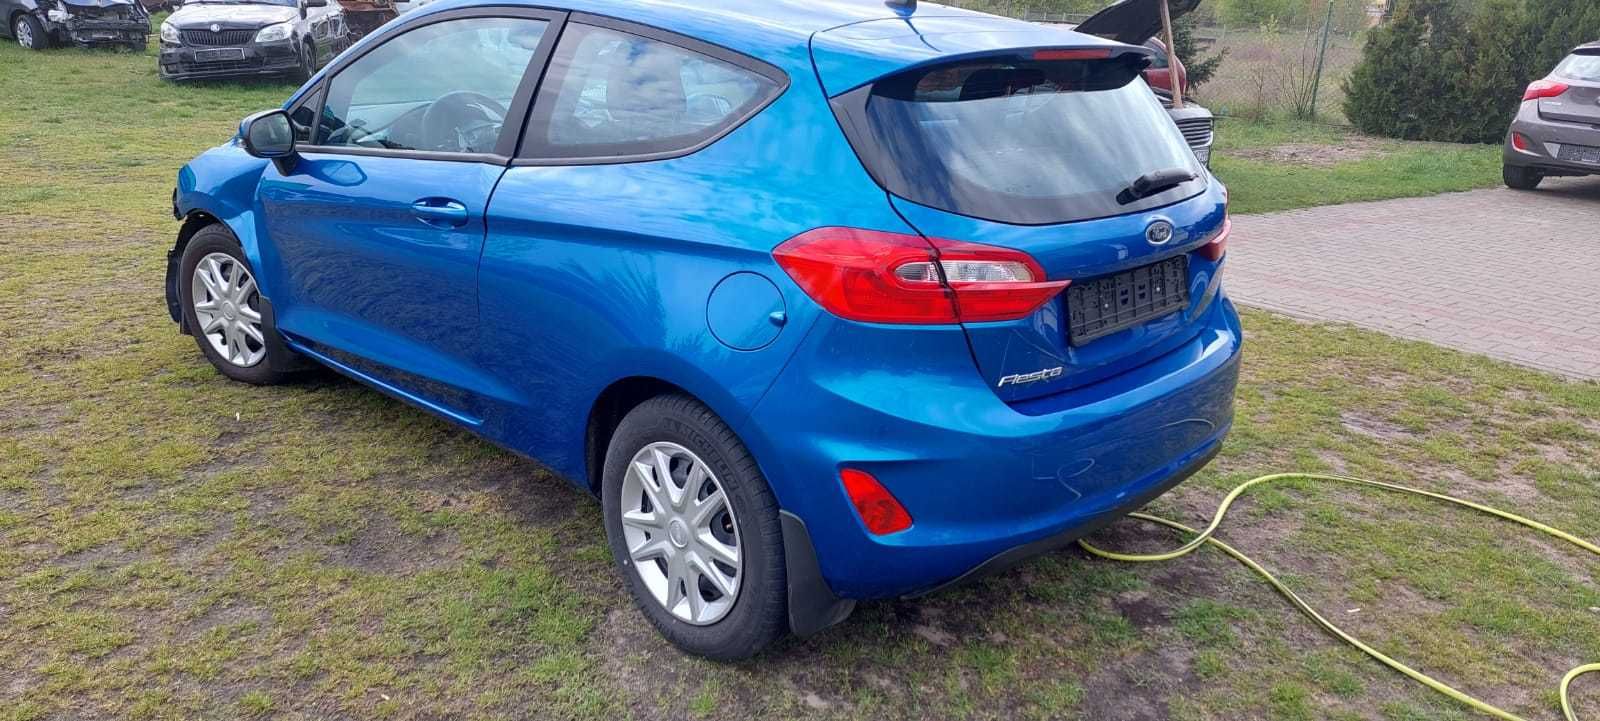 Ford Fiesta 1.1 benzyna 2019r